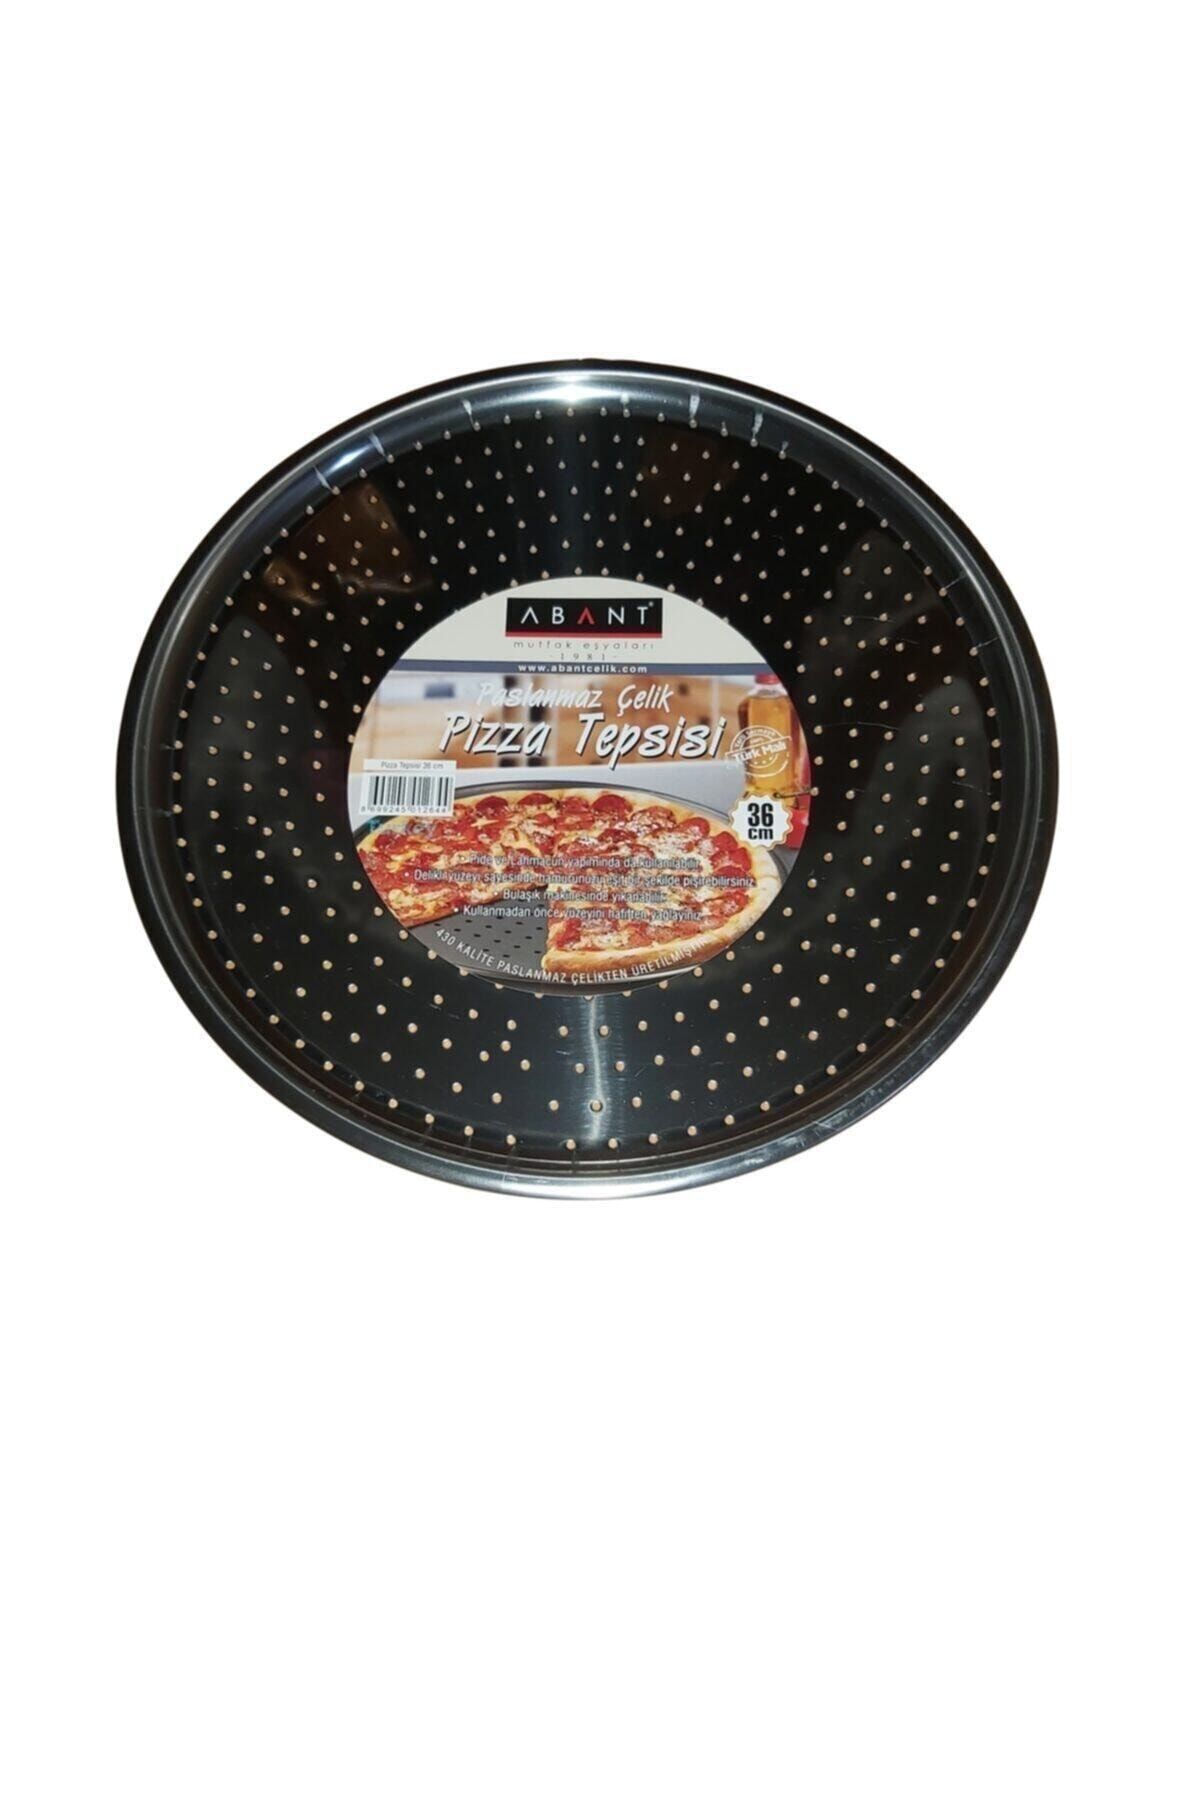 Abant Çelik Pizza Tepsisi 36 Fma012644